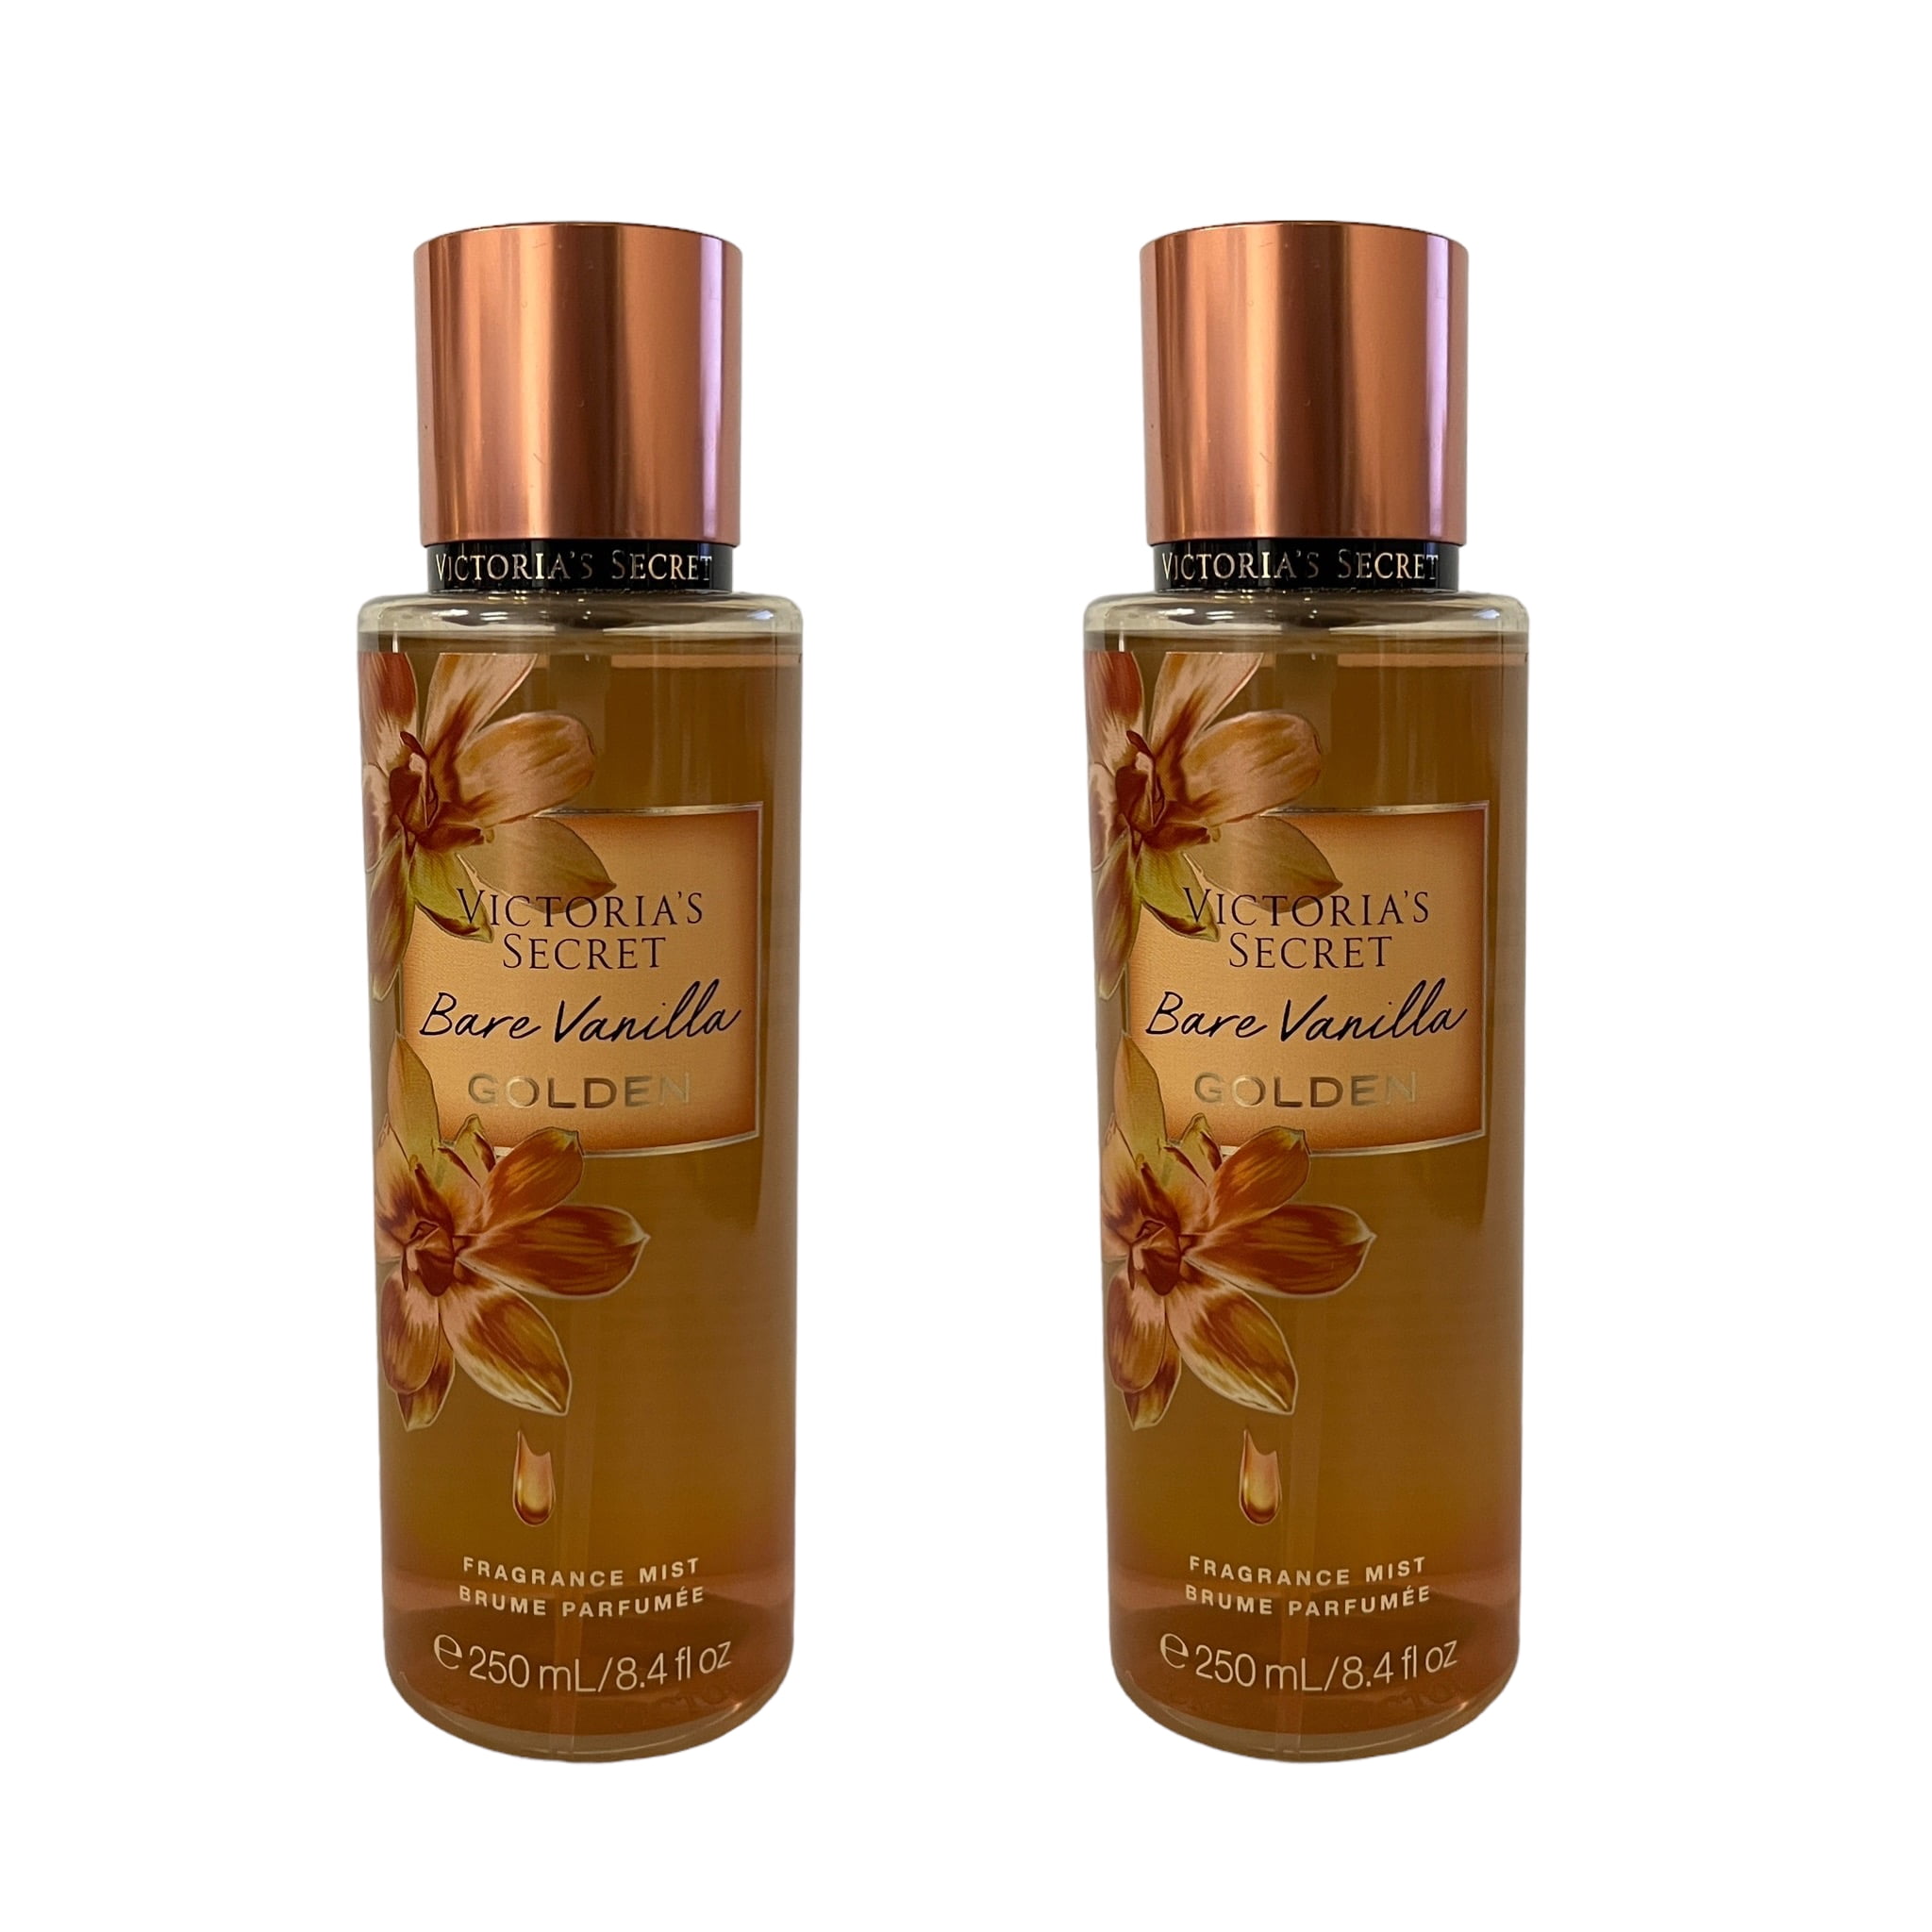  Victoria's Secret Bare Vanilla Golden Fragrance Mist 8.4 Fl Oz  : Beauty & Personal Care